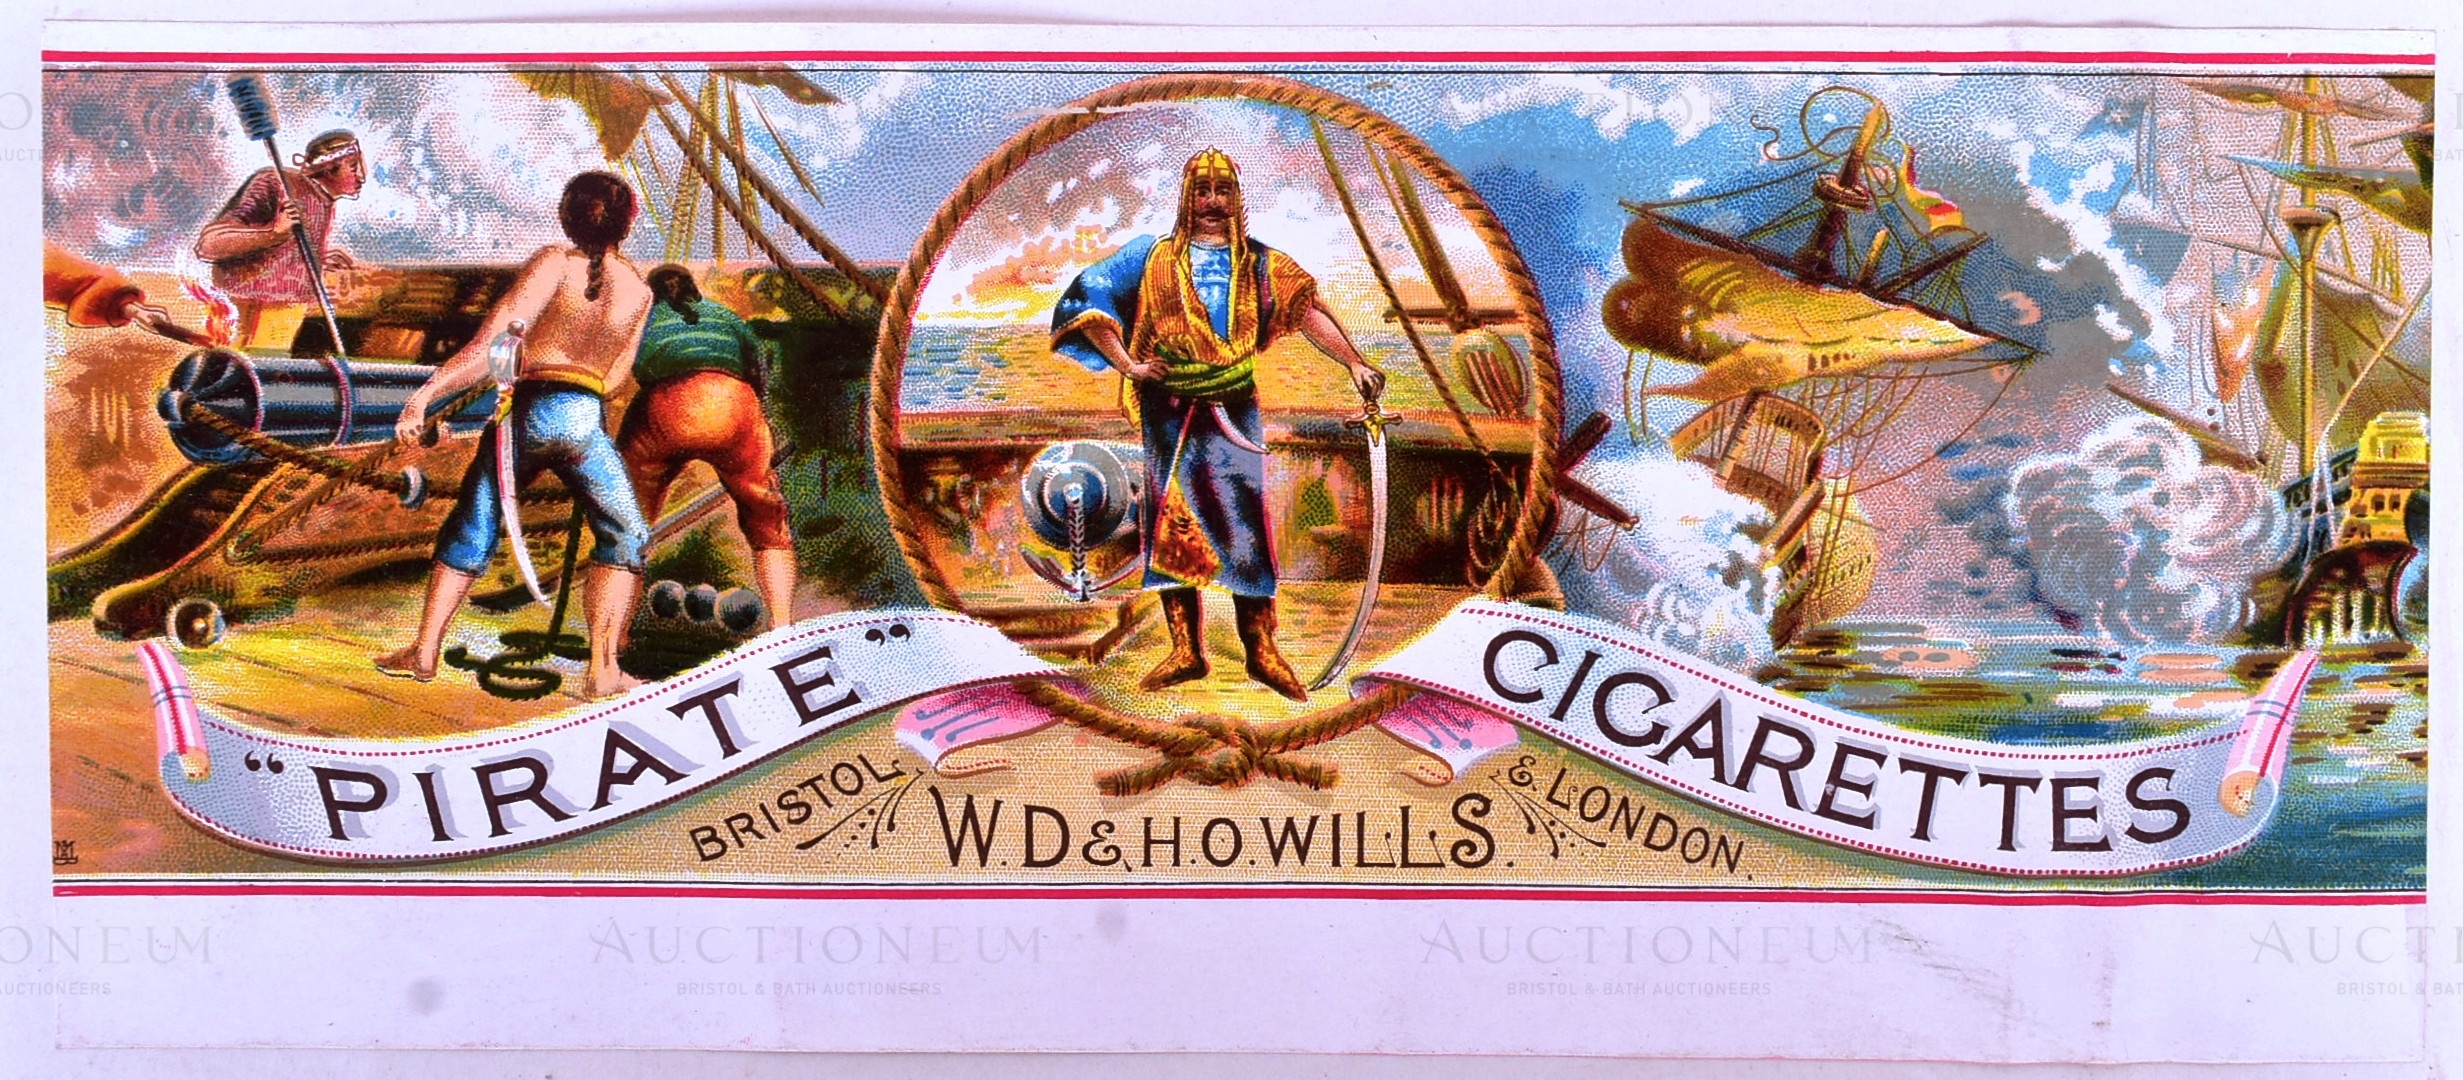 W. D. & H. O. WILLS - PIRATE CIGARETTES - ORIGINAL PRINTER'S PROOF ARTWORK - Image 2 of 5